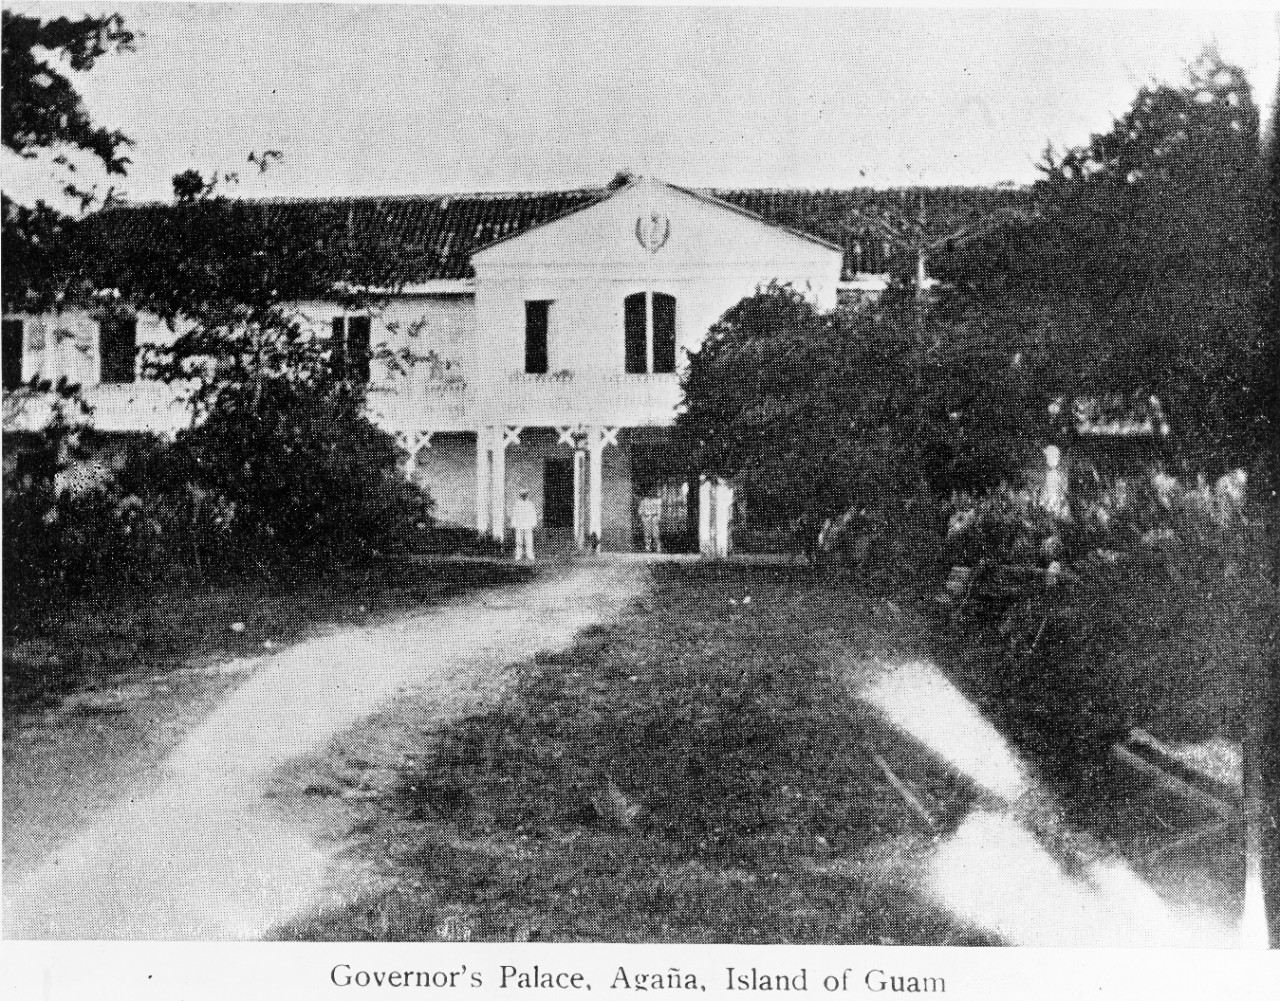 Governor's Palace, Agana, Guam